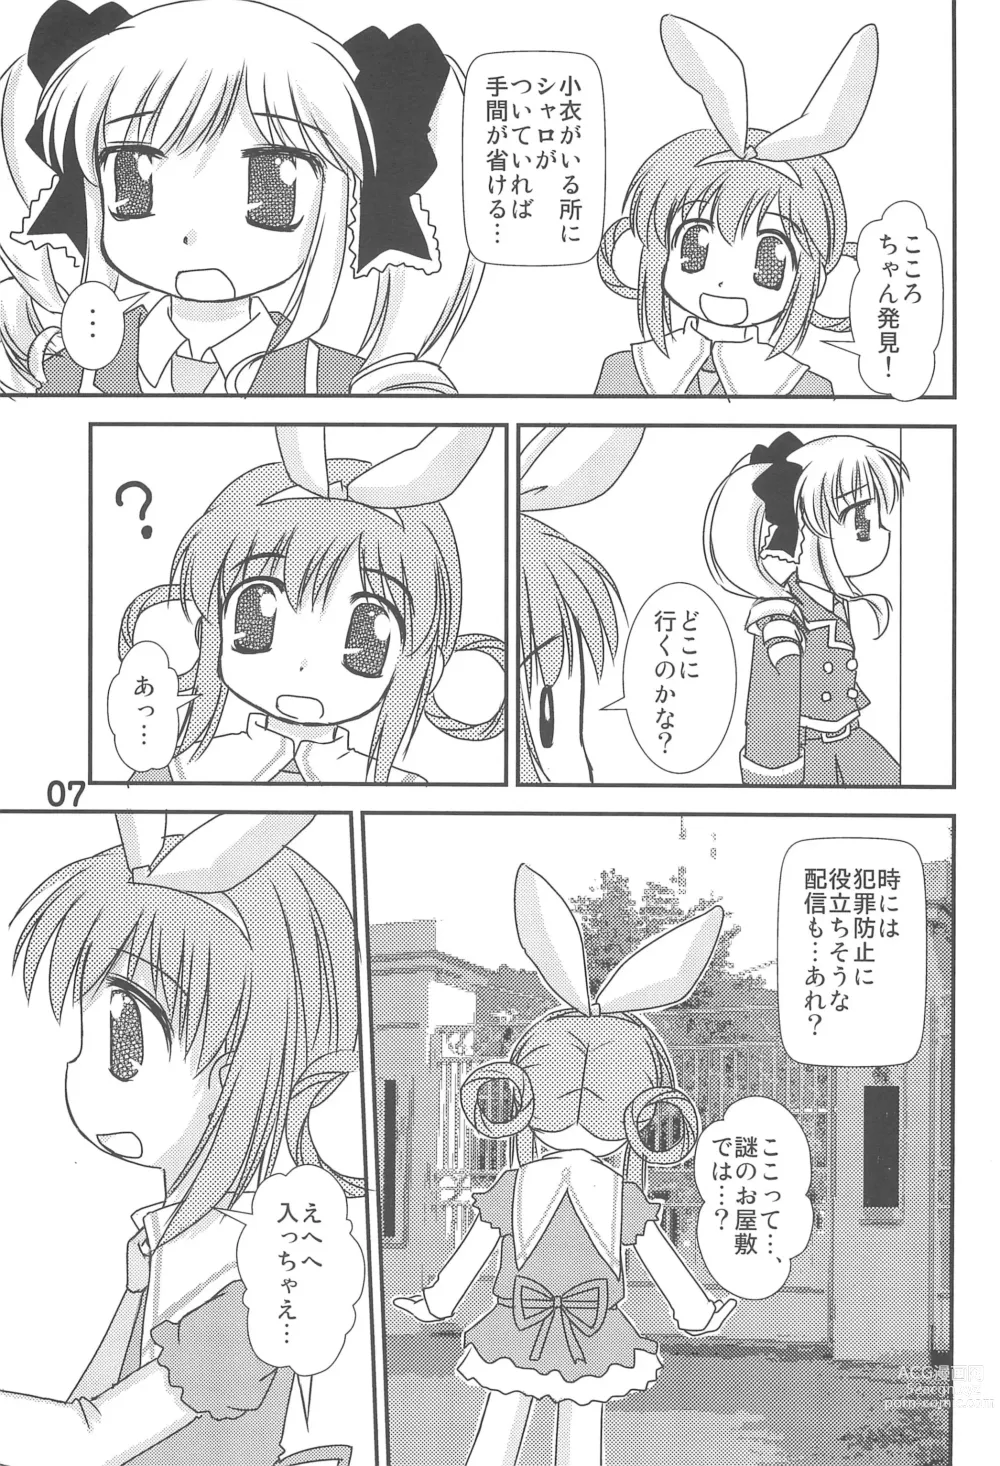 Page 9 of doujinshi Kokoro-chan Haishinchuu now!